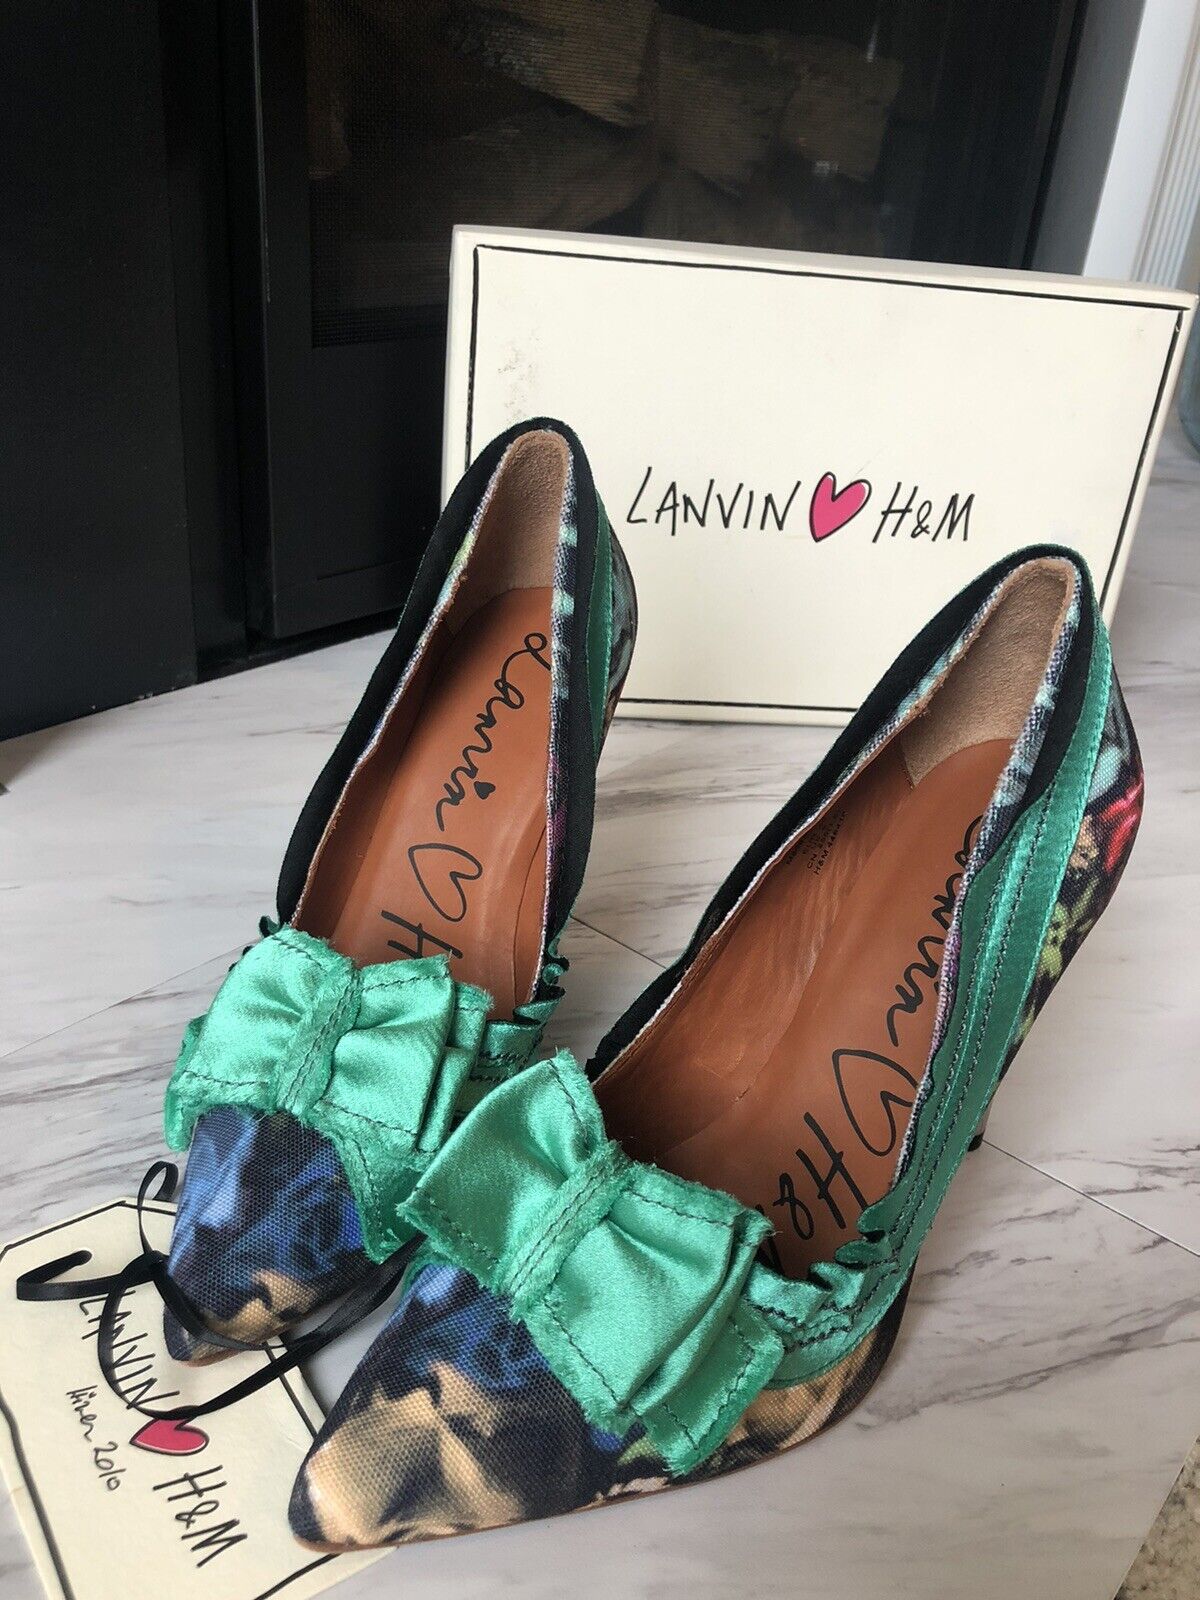 LANVIN⚡️H&M floral satin metallic heel pumps shoes 40 9 green bow